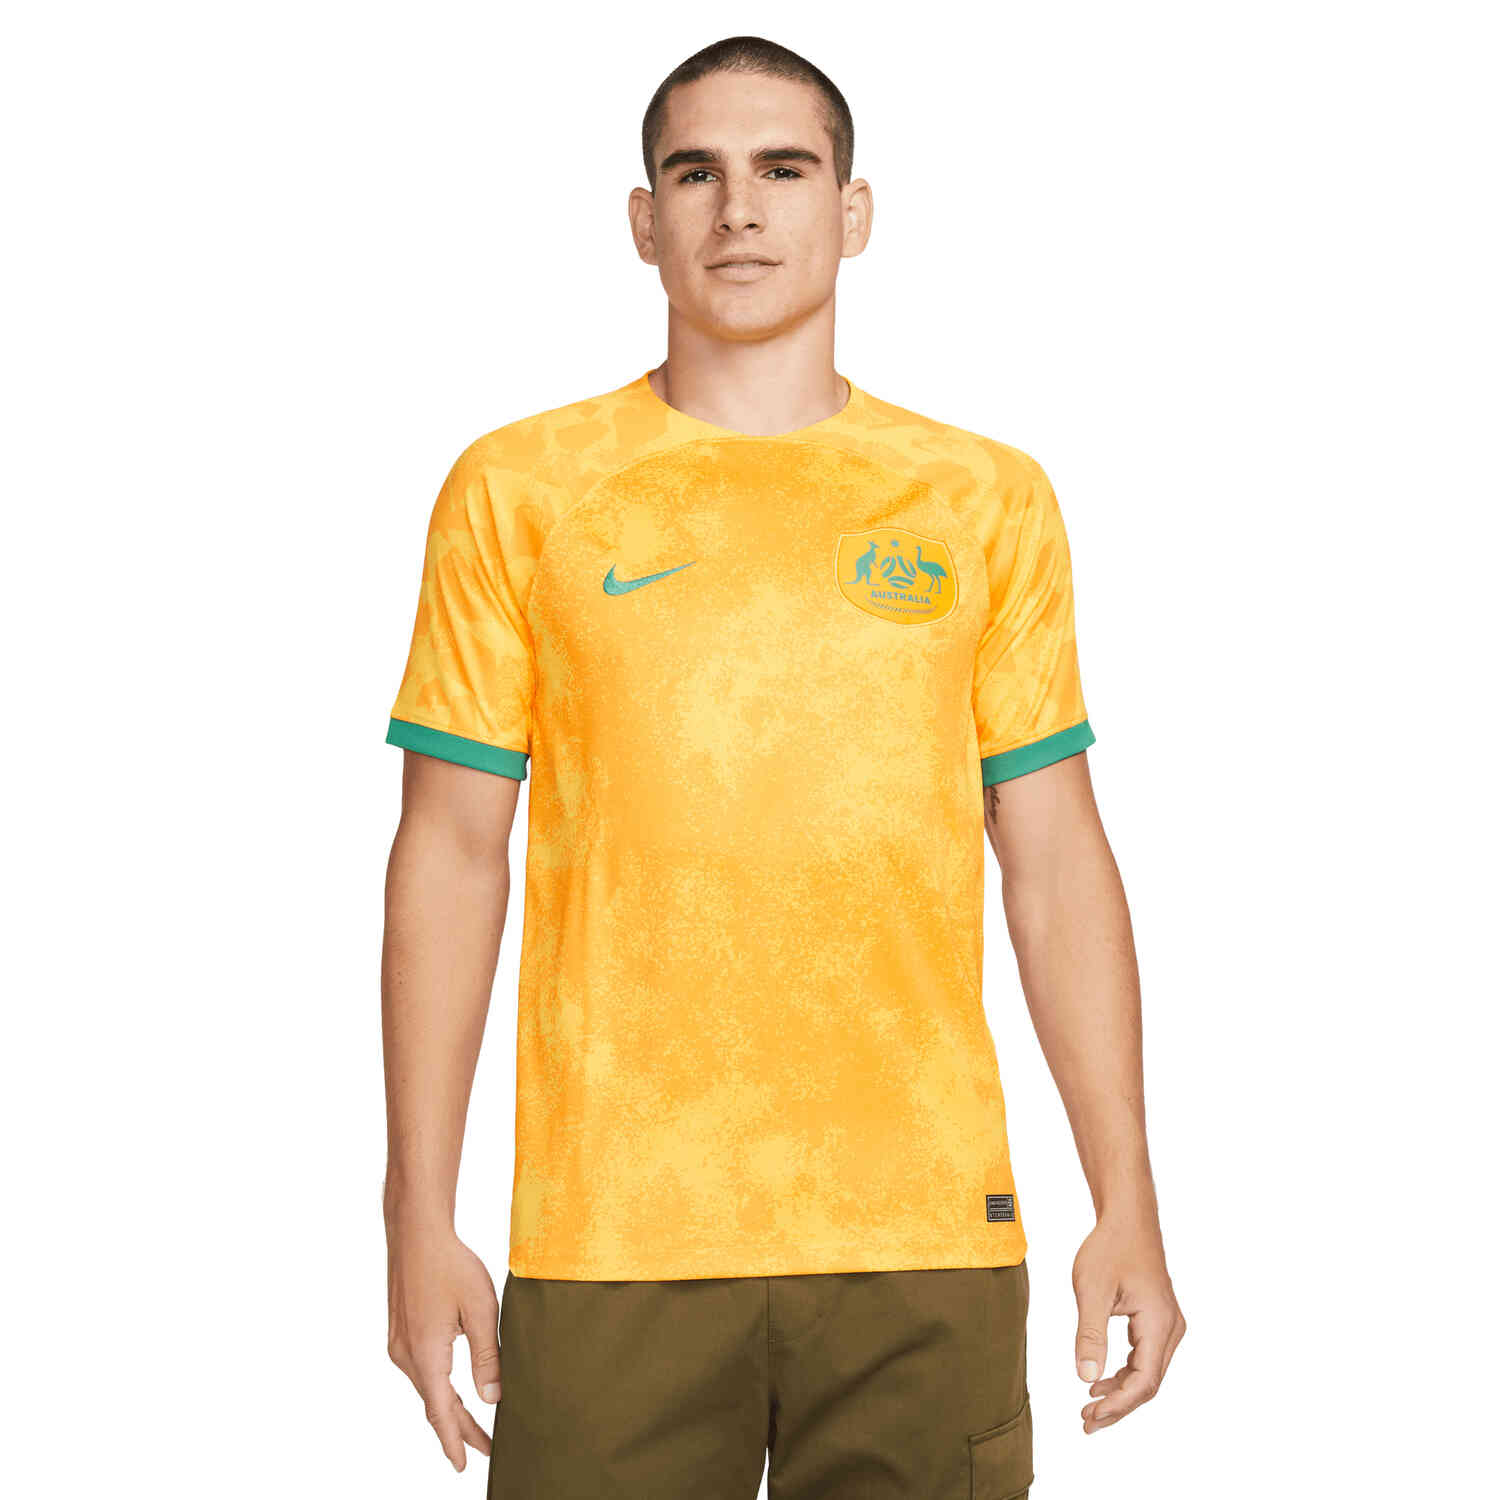 2022 Nike Brazil Home Jersey - SoccerPro